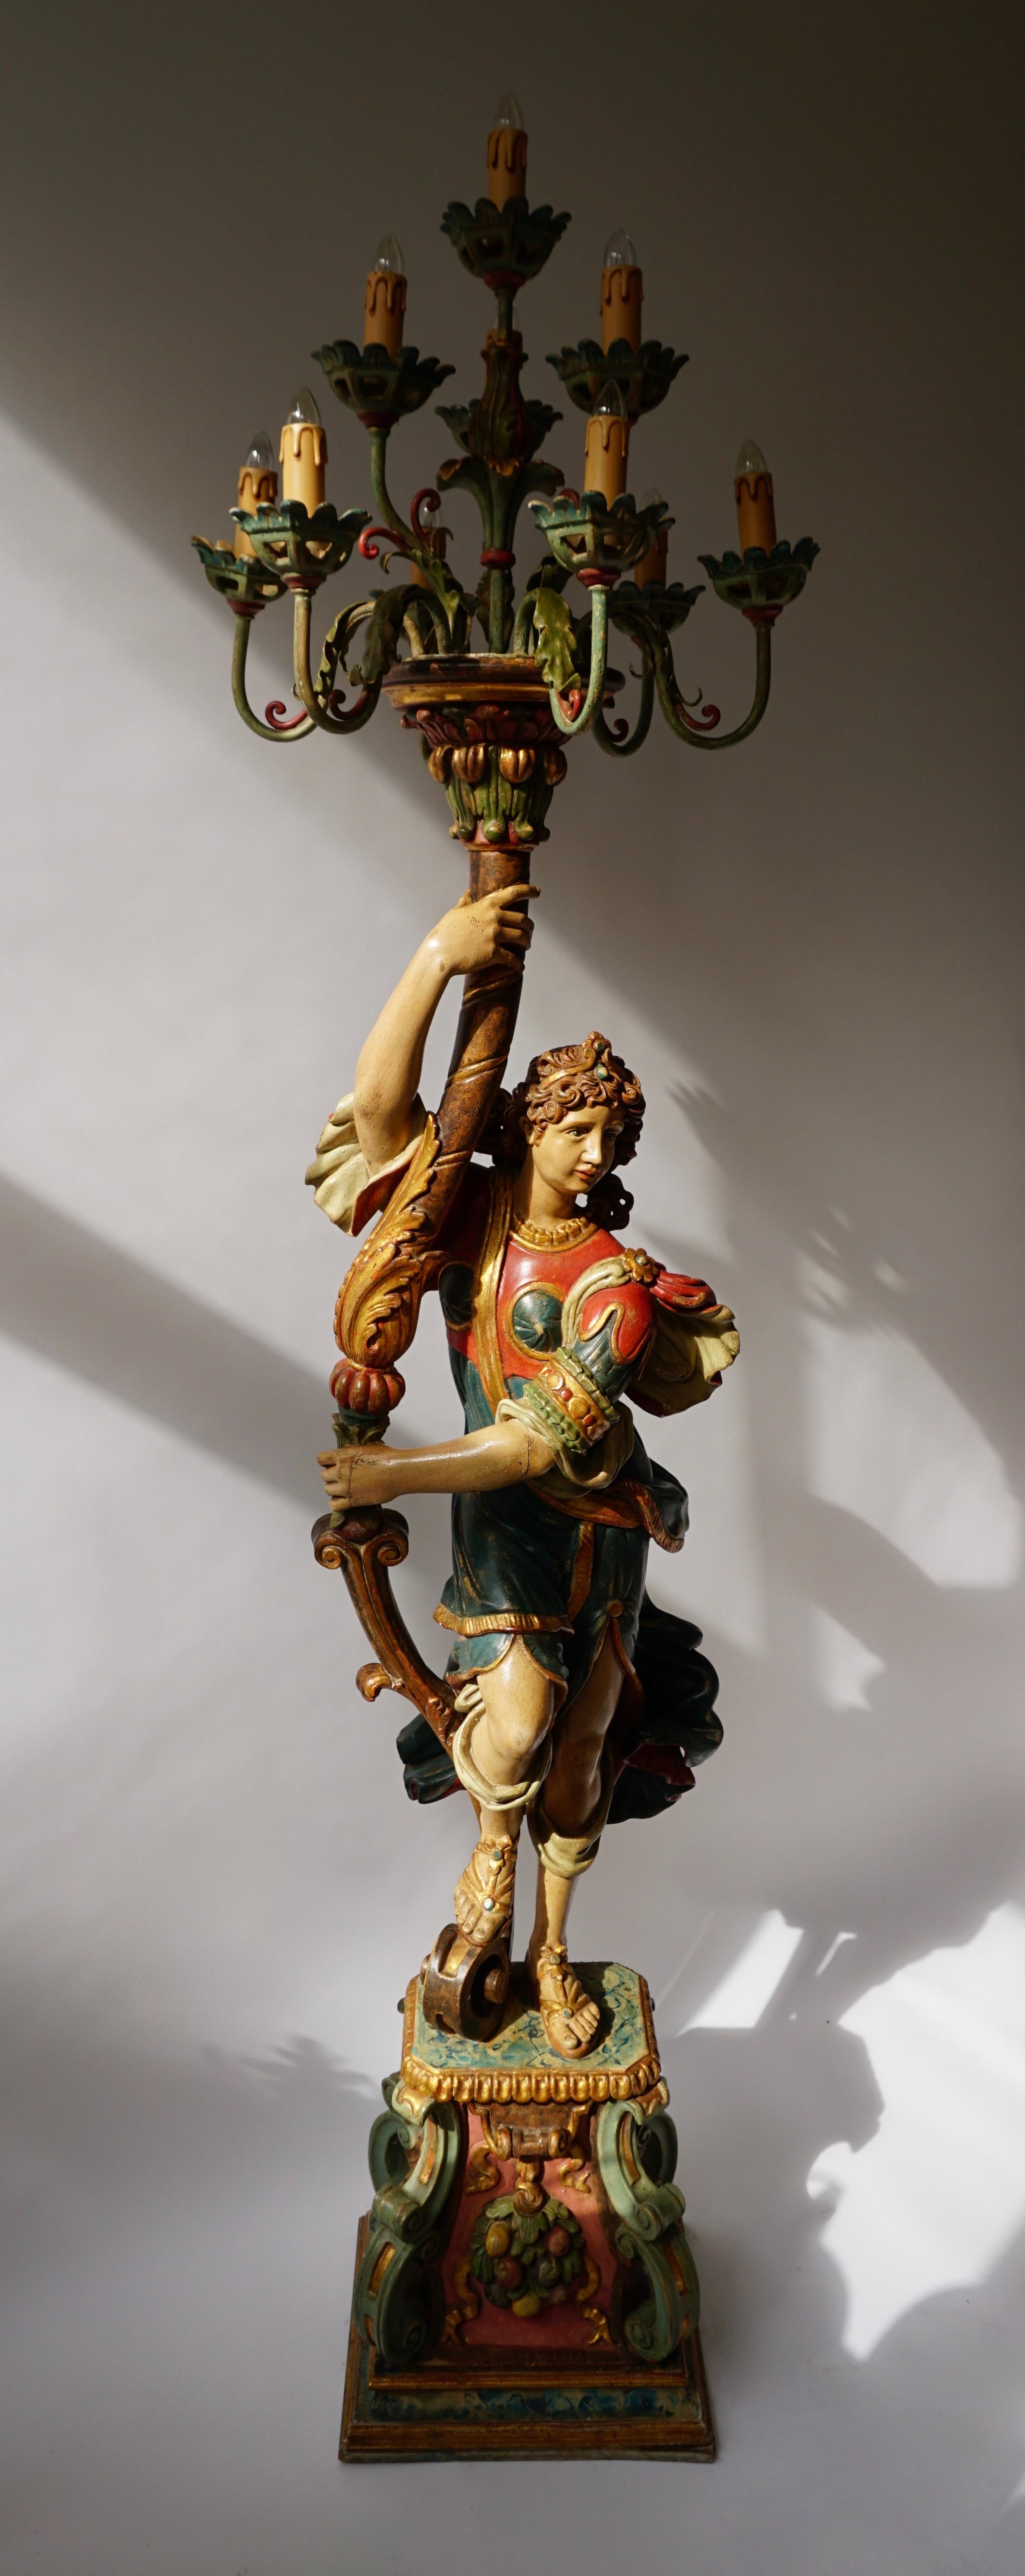 Hollywood Regency Italian Gilded Wood Venetian Figural Torchère Candelabra Floor Lamp